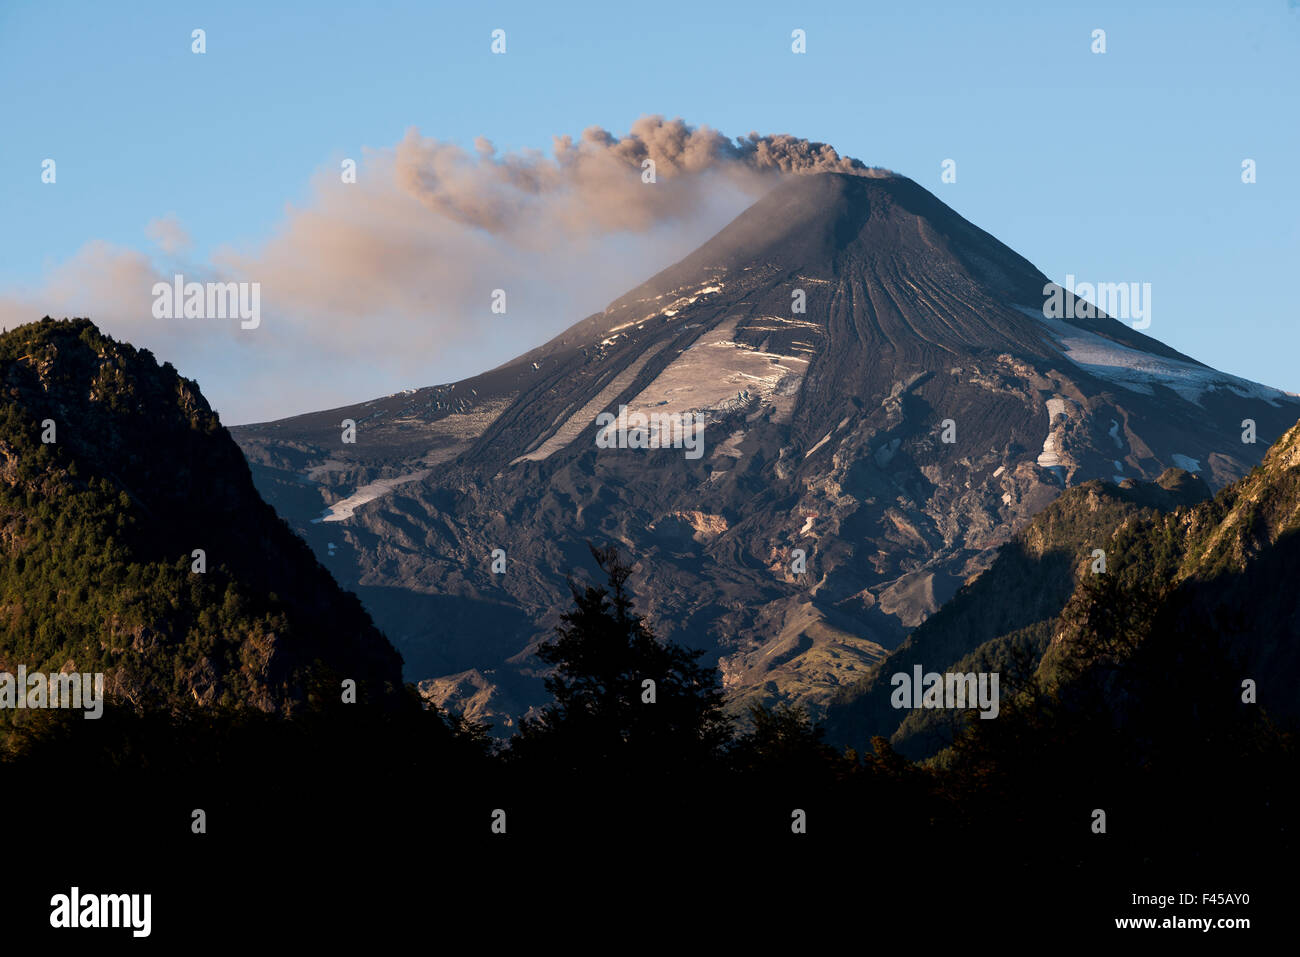 Villarrica Volcano, araucania region, Chile. Stock Photo